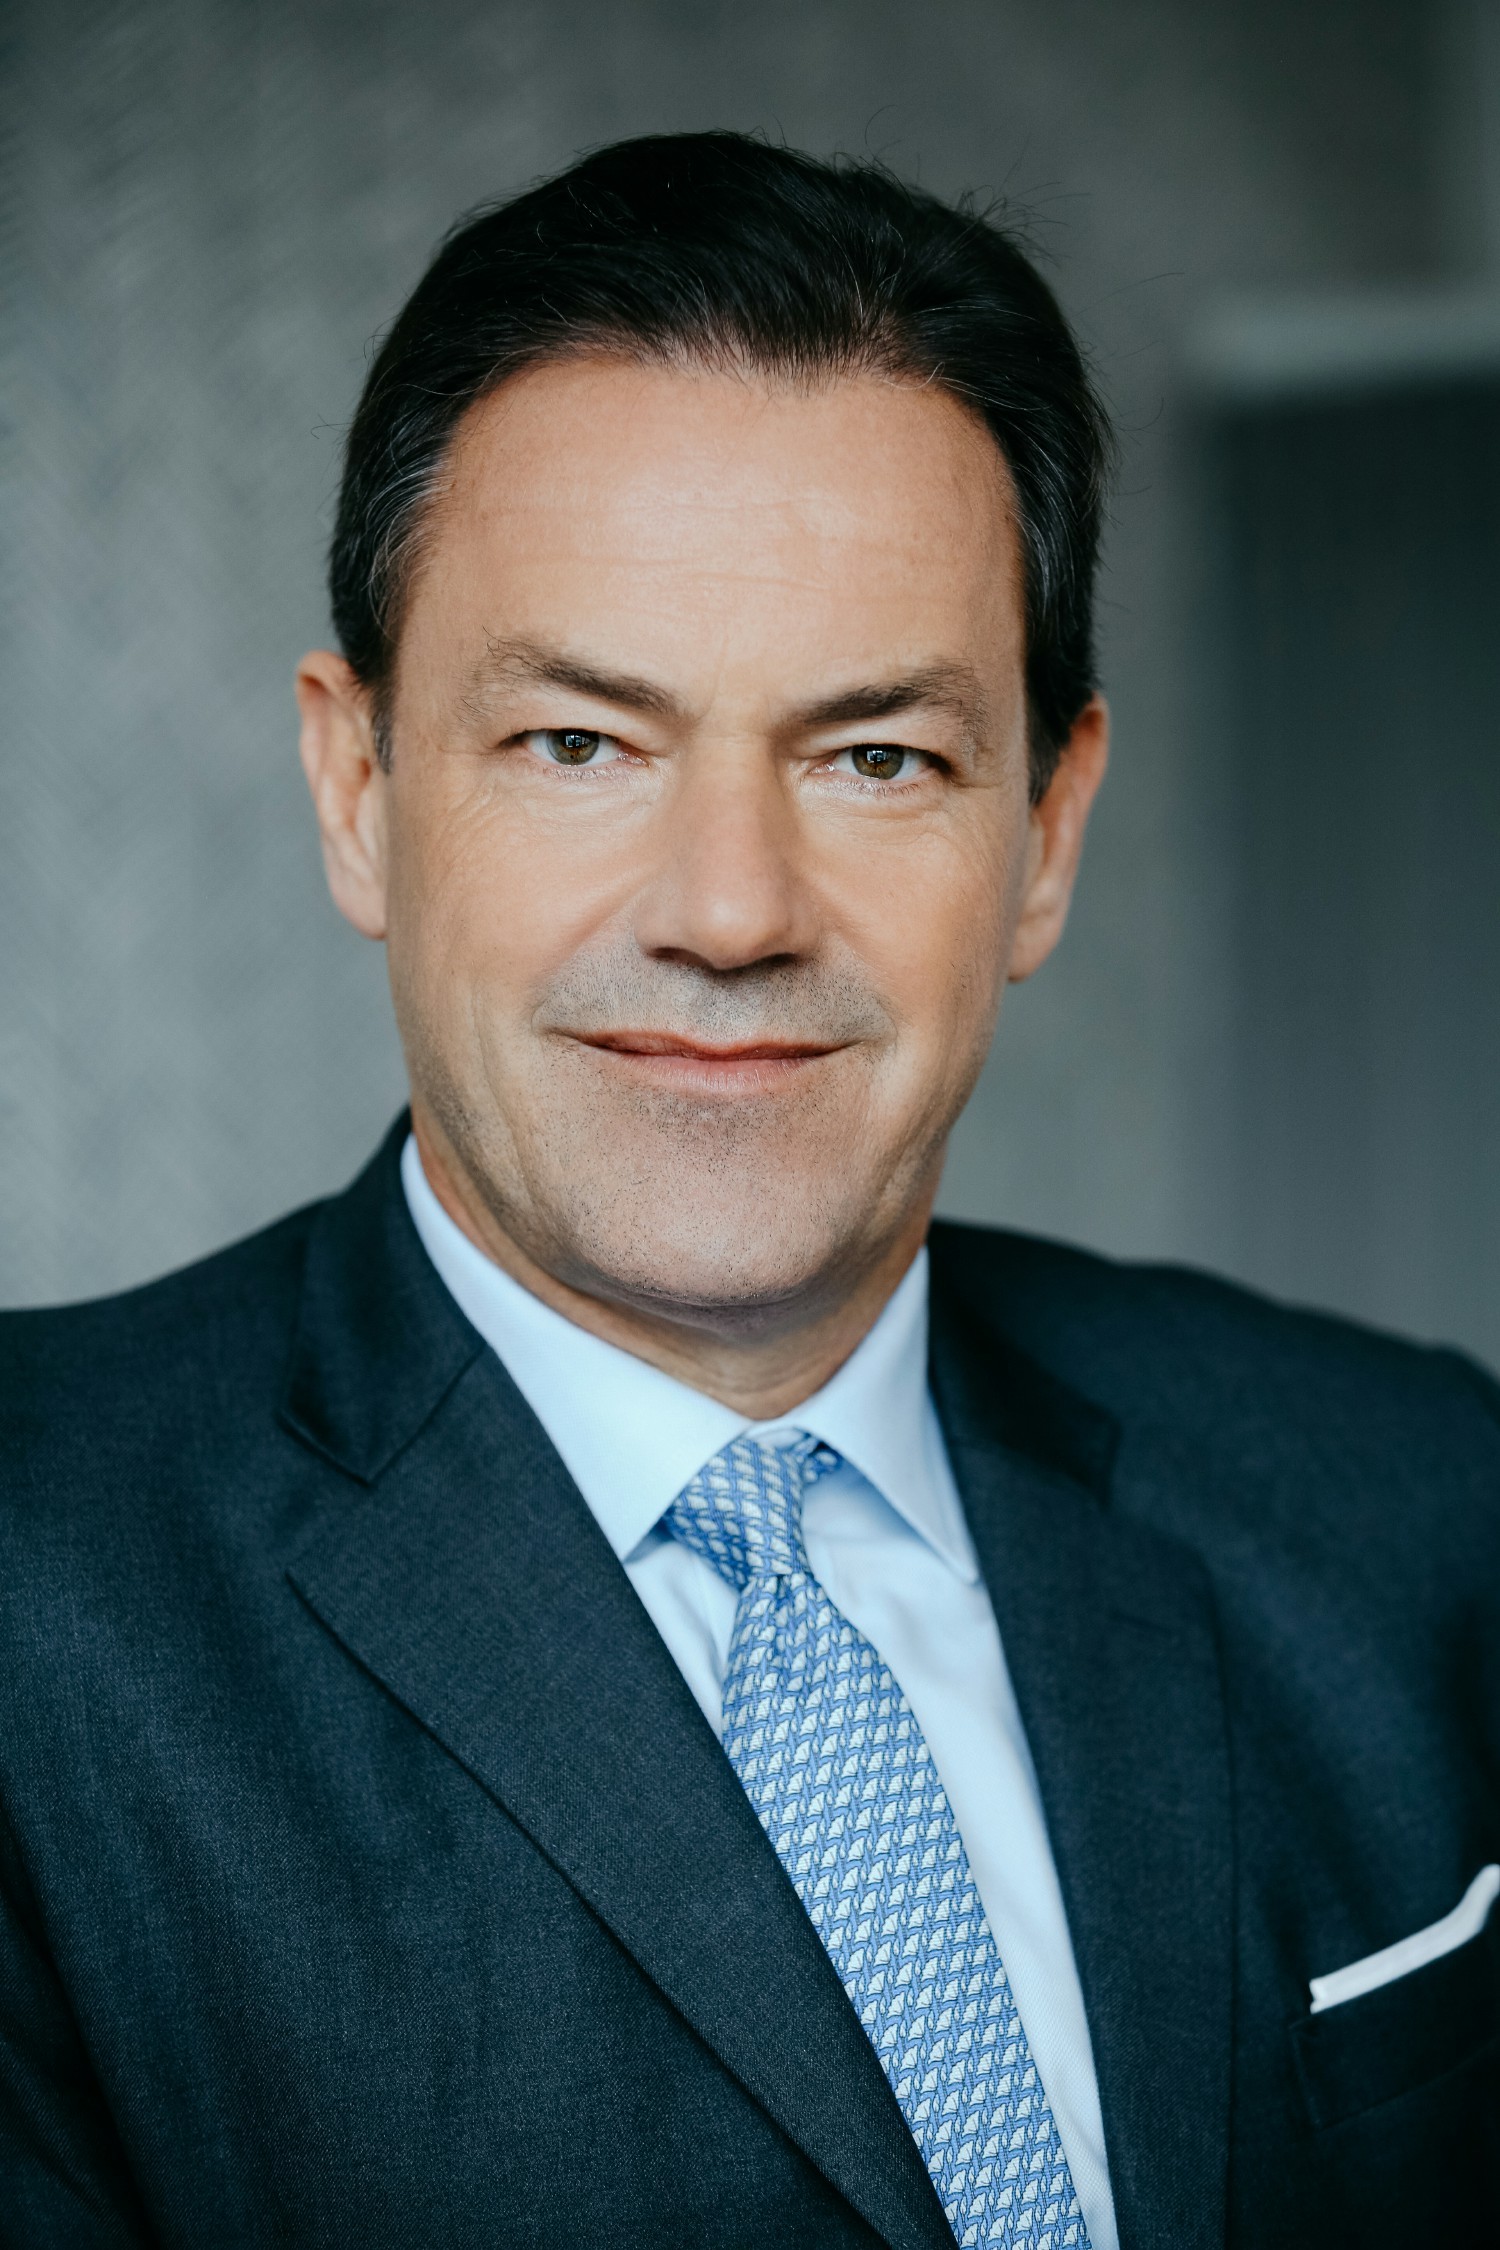 Our CEO Joachim Müller